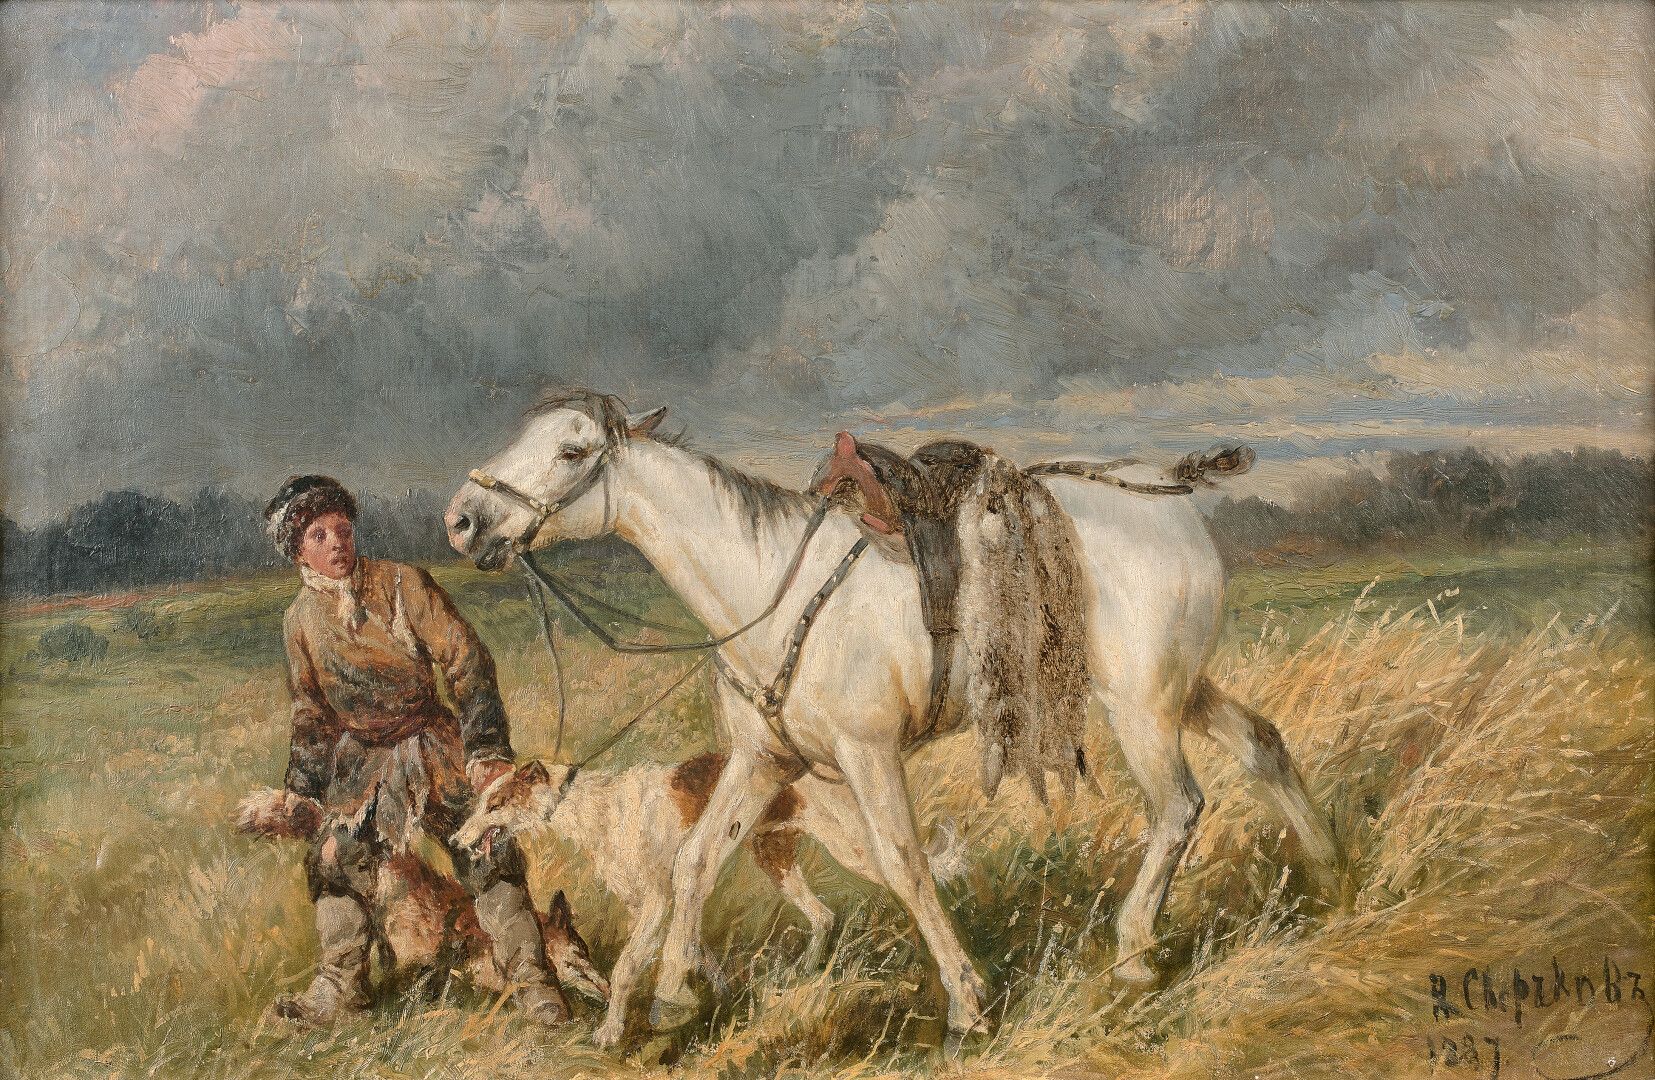 Null 尼古拉-施瓦茨科夫 (1817-1898)

狩猎归来

布面油画。

右下方有签名和日期1887

48 x 73 cm

Nicolas Swer&hellip;